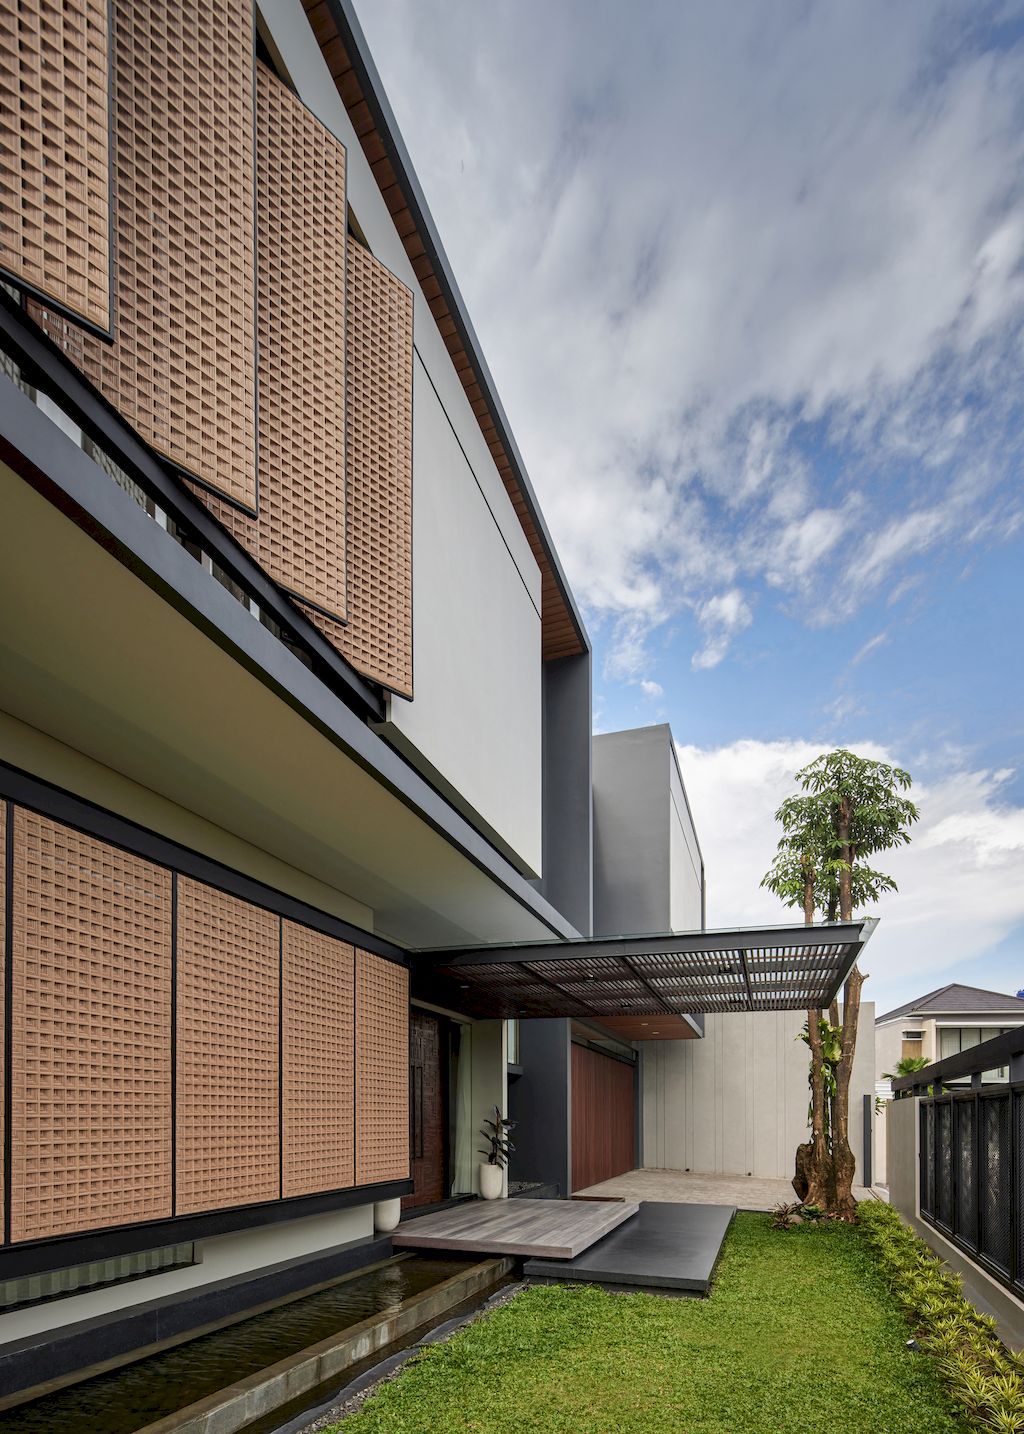 DJ-House-with-tropical-style-modern-architecture-design-by-Rakta-Studio-6